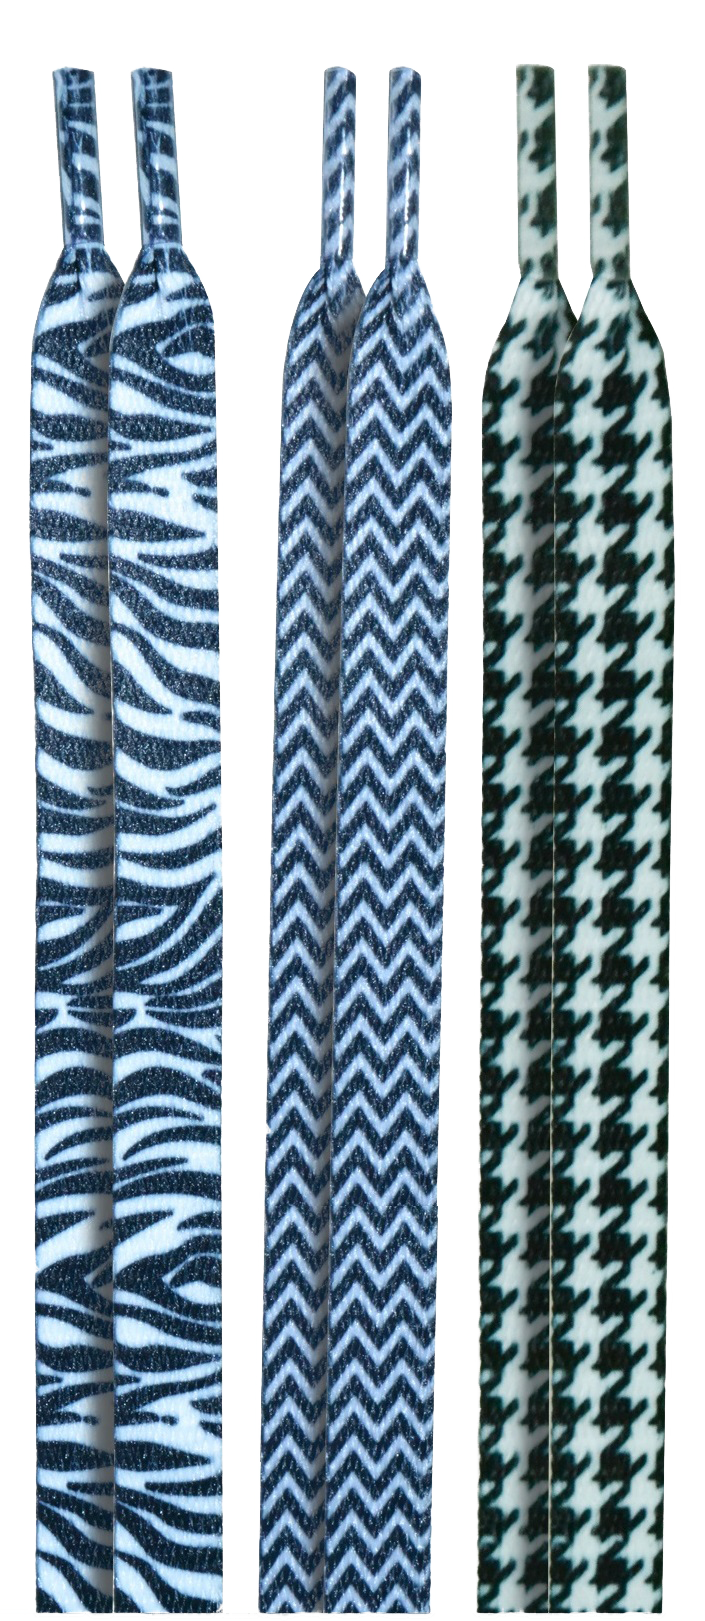 10 Seconds ® Athletic Flat Laces | Zebra/Chevron/Herringbone Printed - 3 Pack